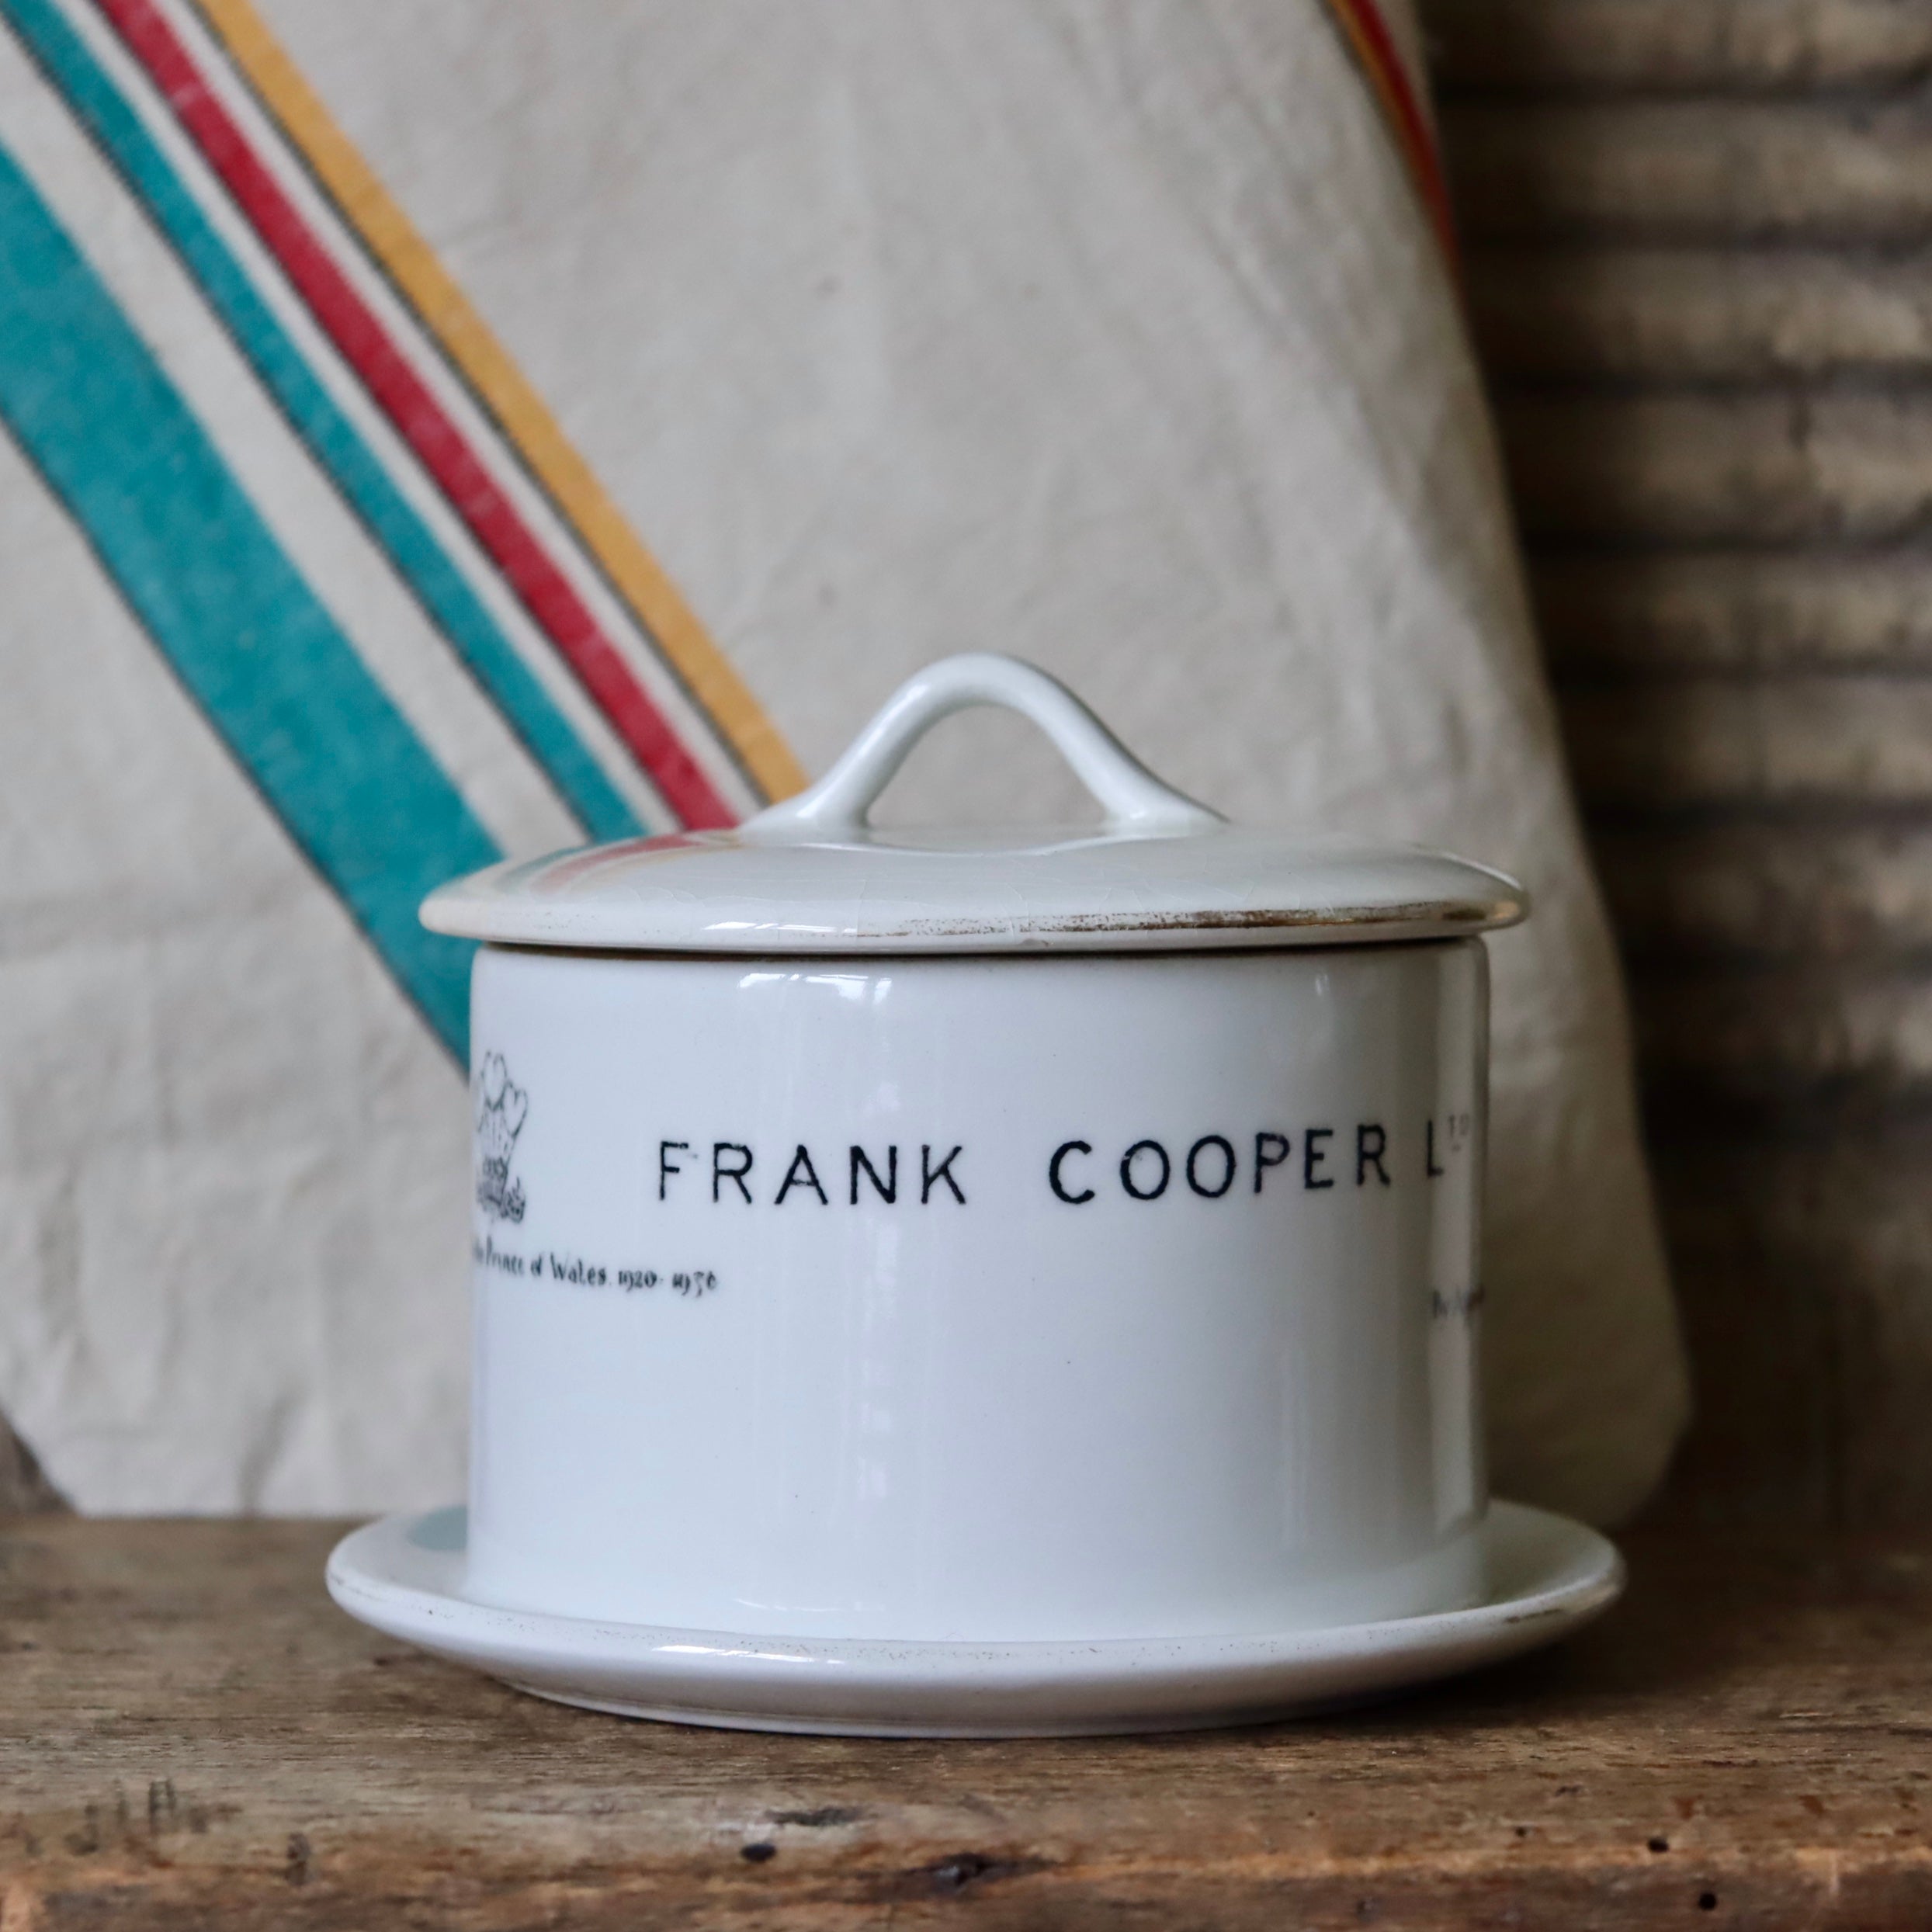 Rare Maling Frank Cooper's Marmalade Pot